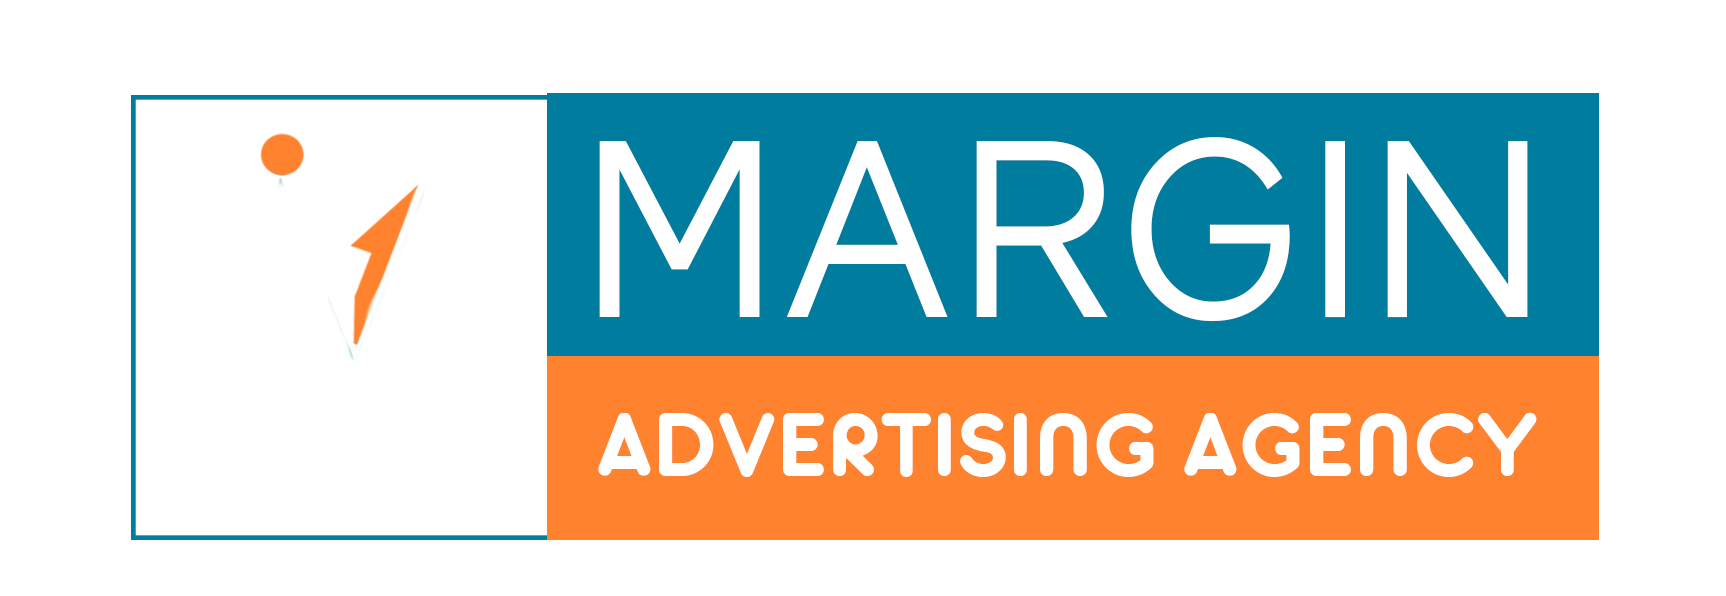 about-margin-margin-advertising-agency